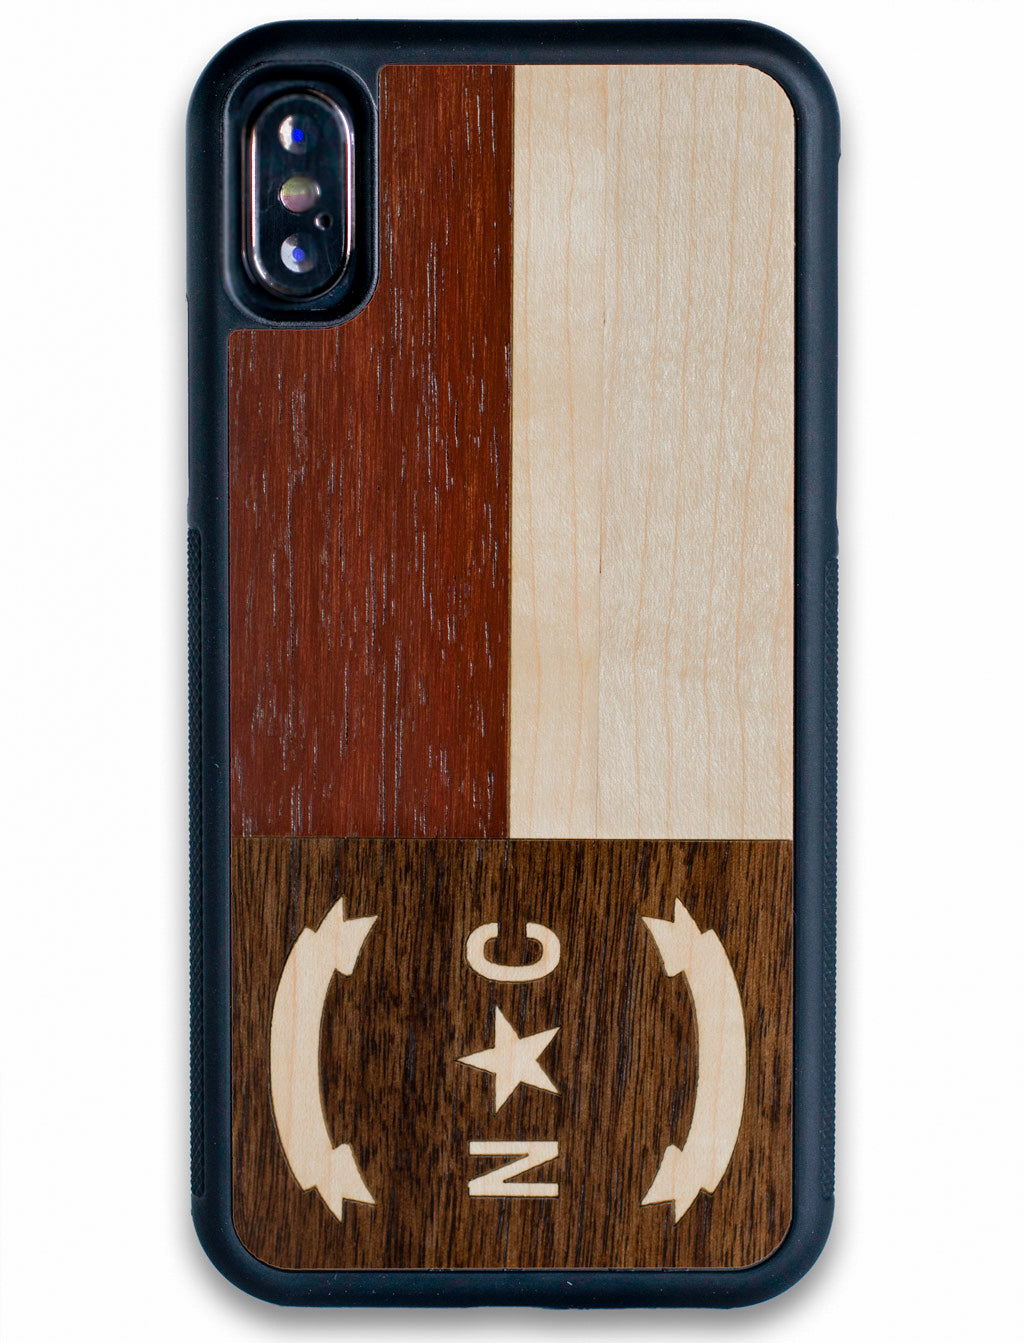 North Carolina flag wooden iPhone X case